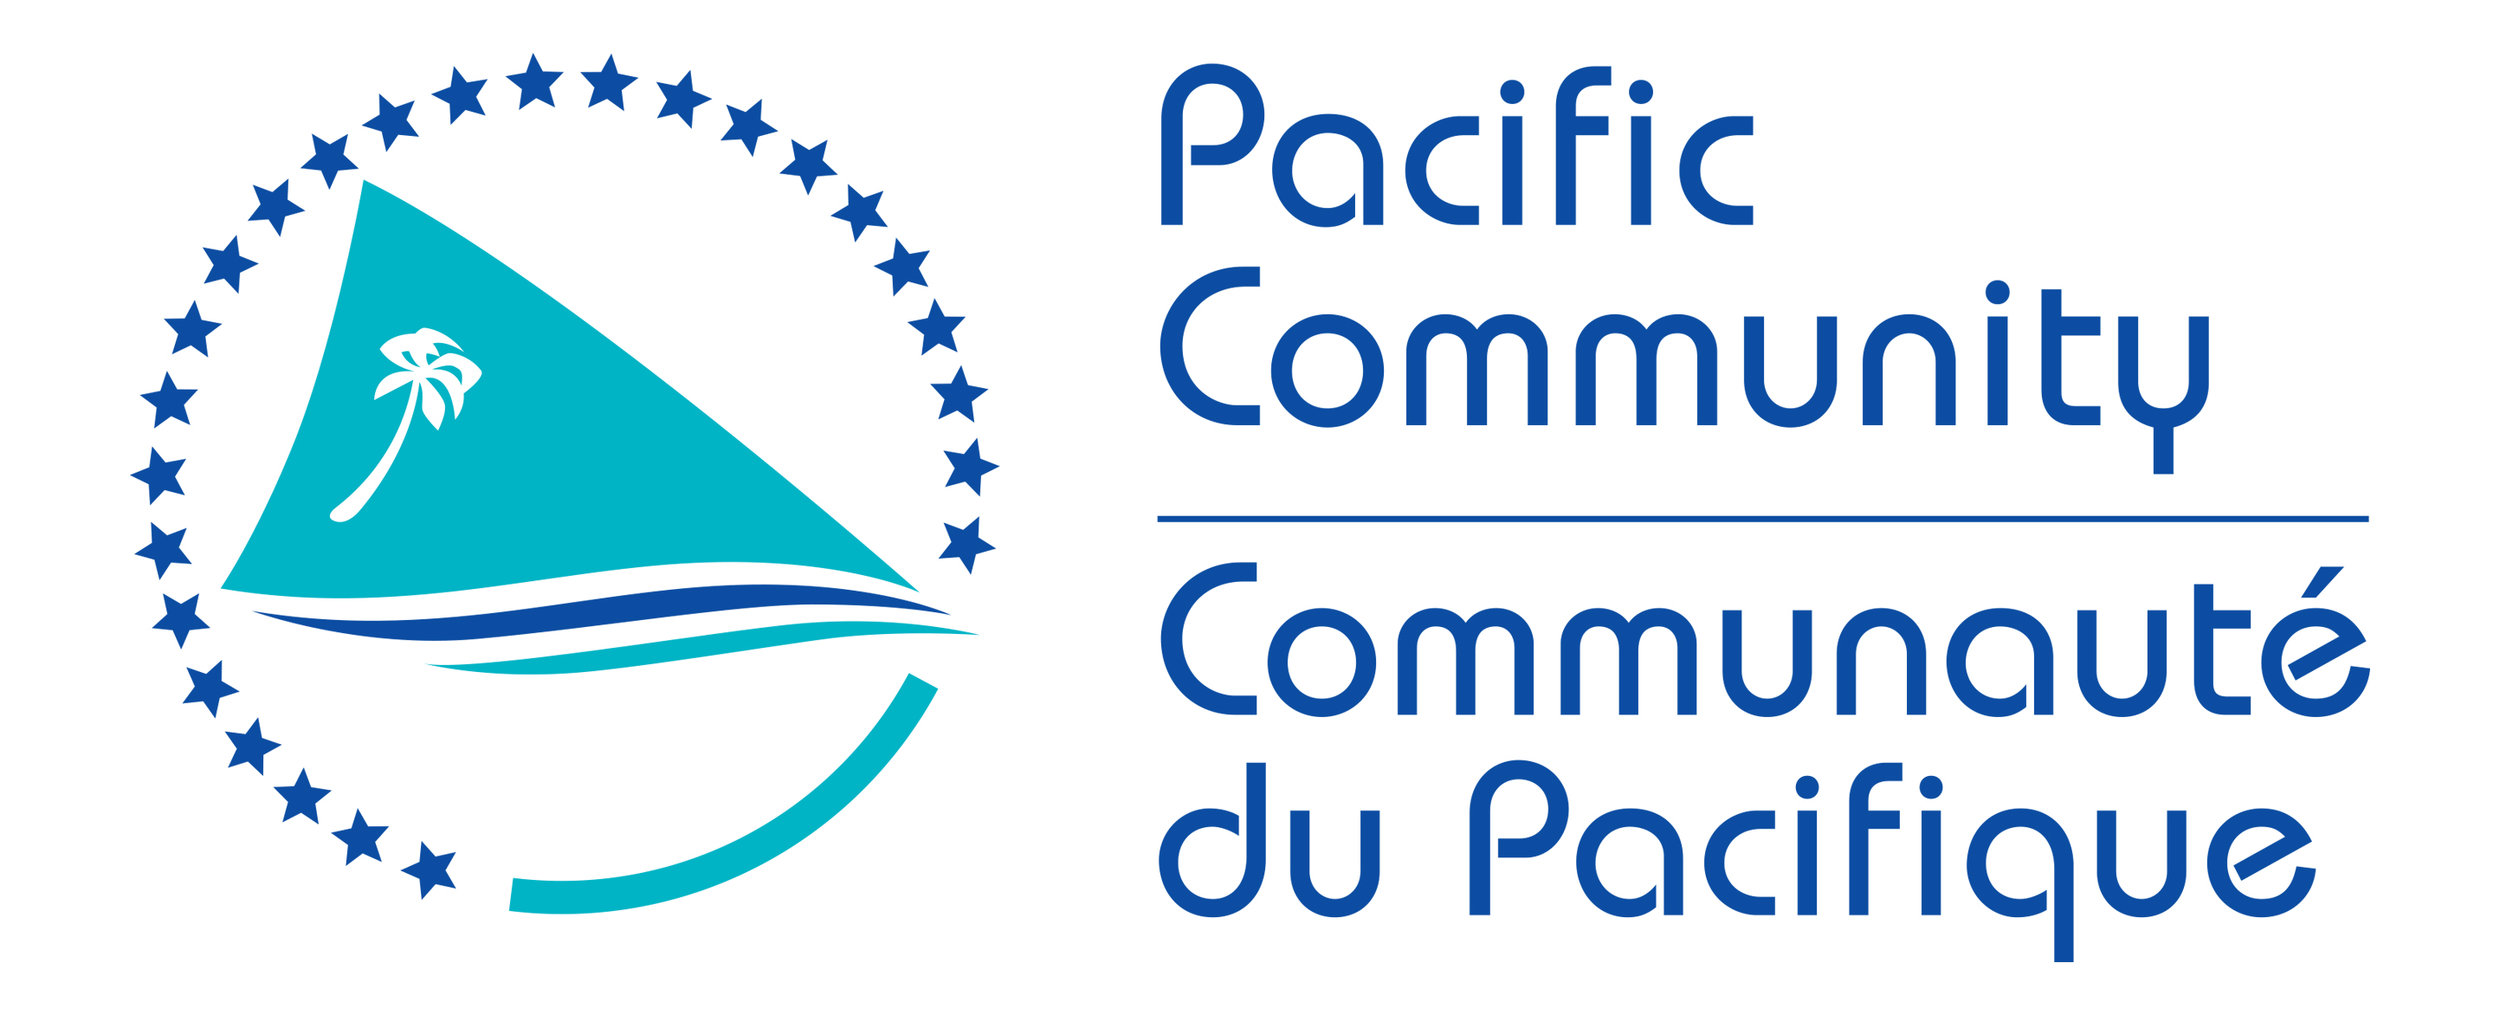 Pacific community.jpg